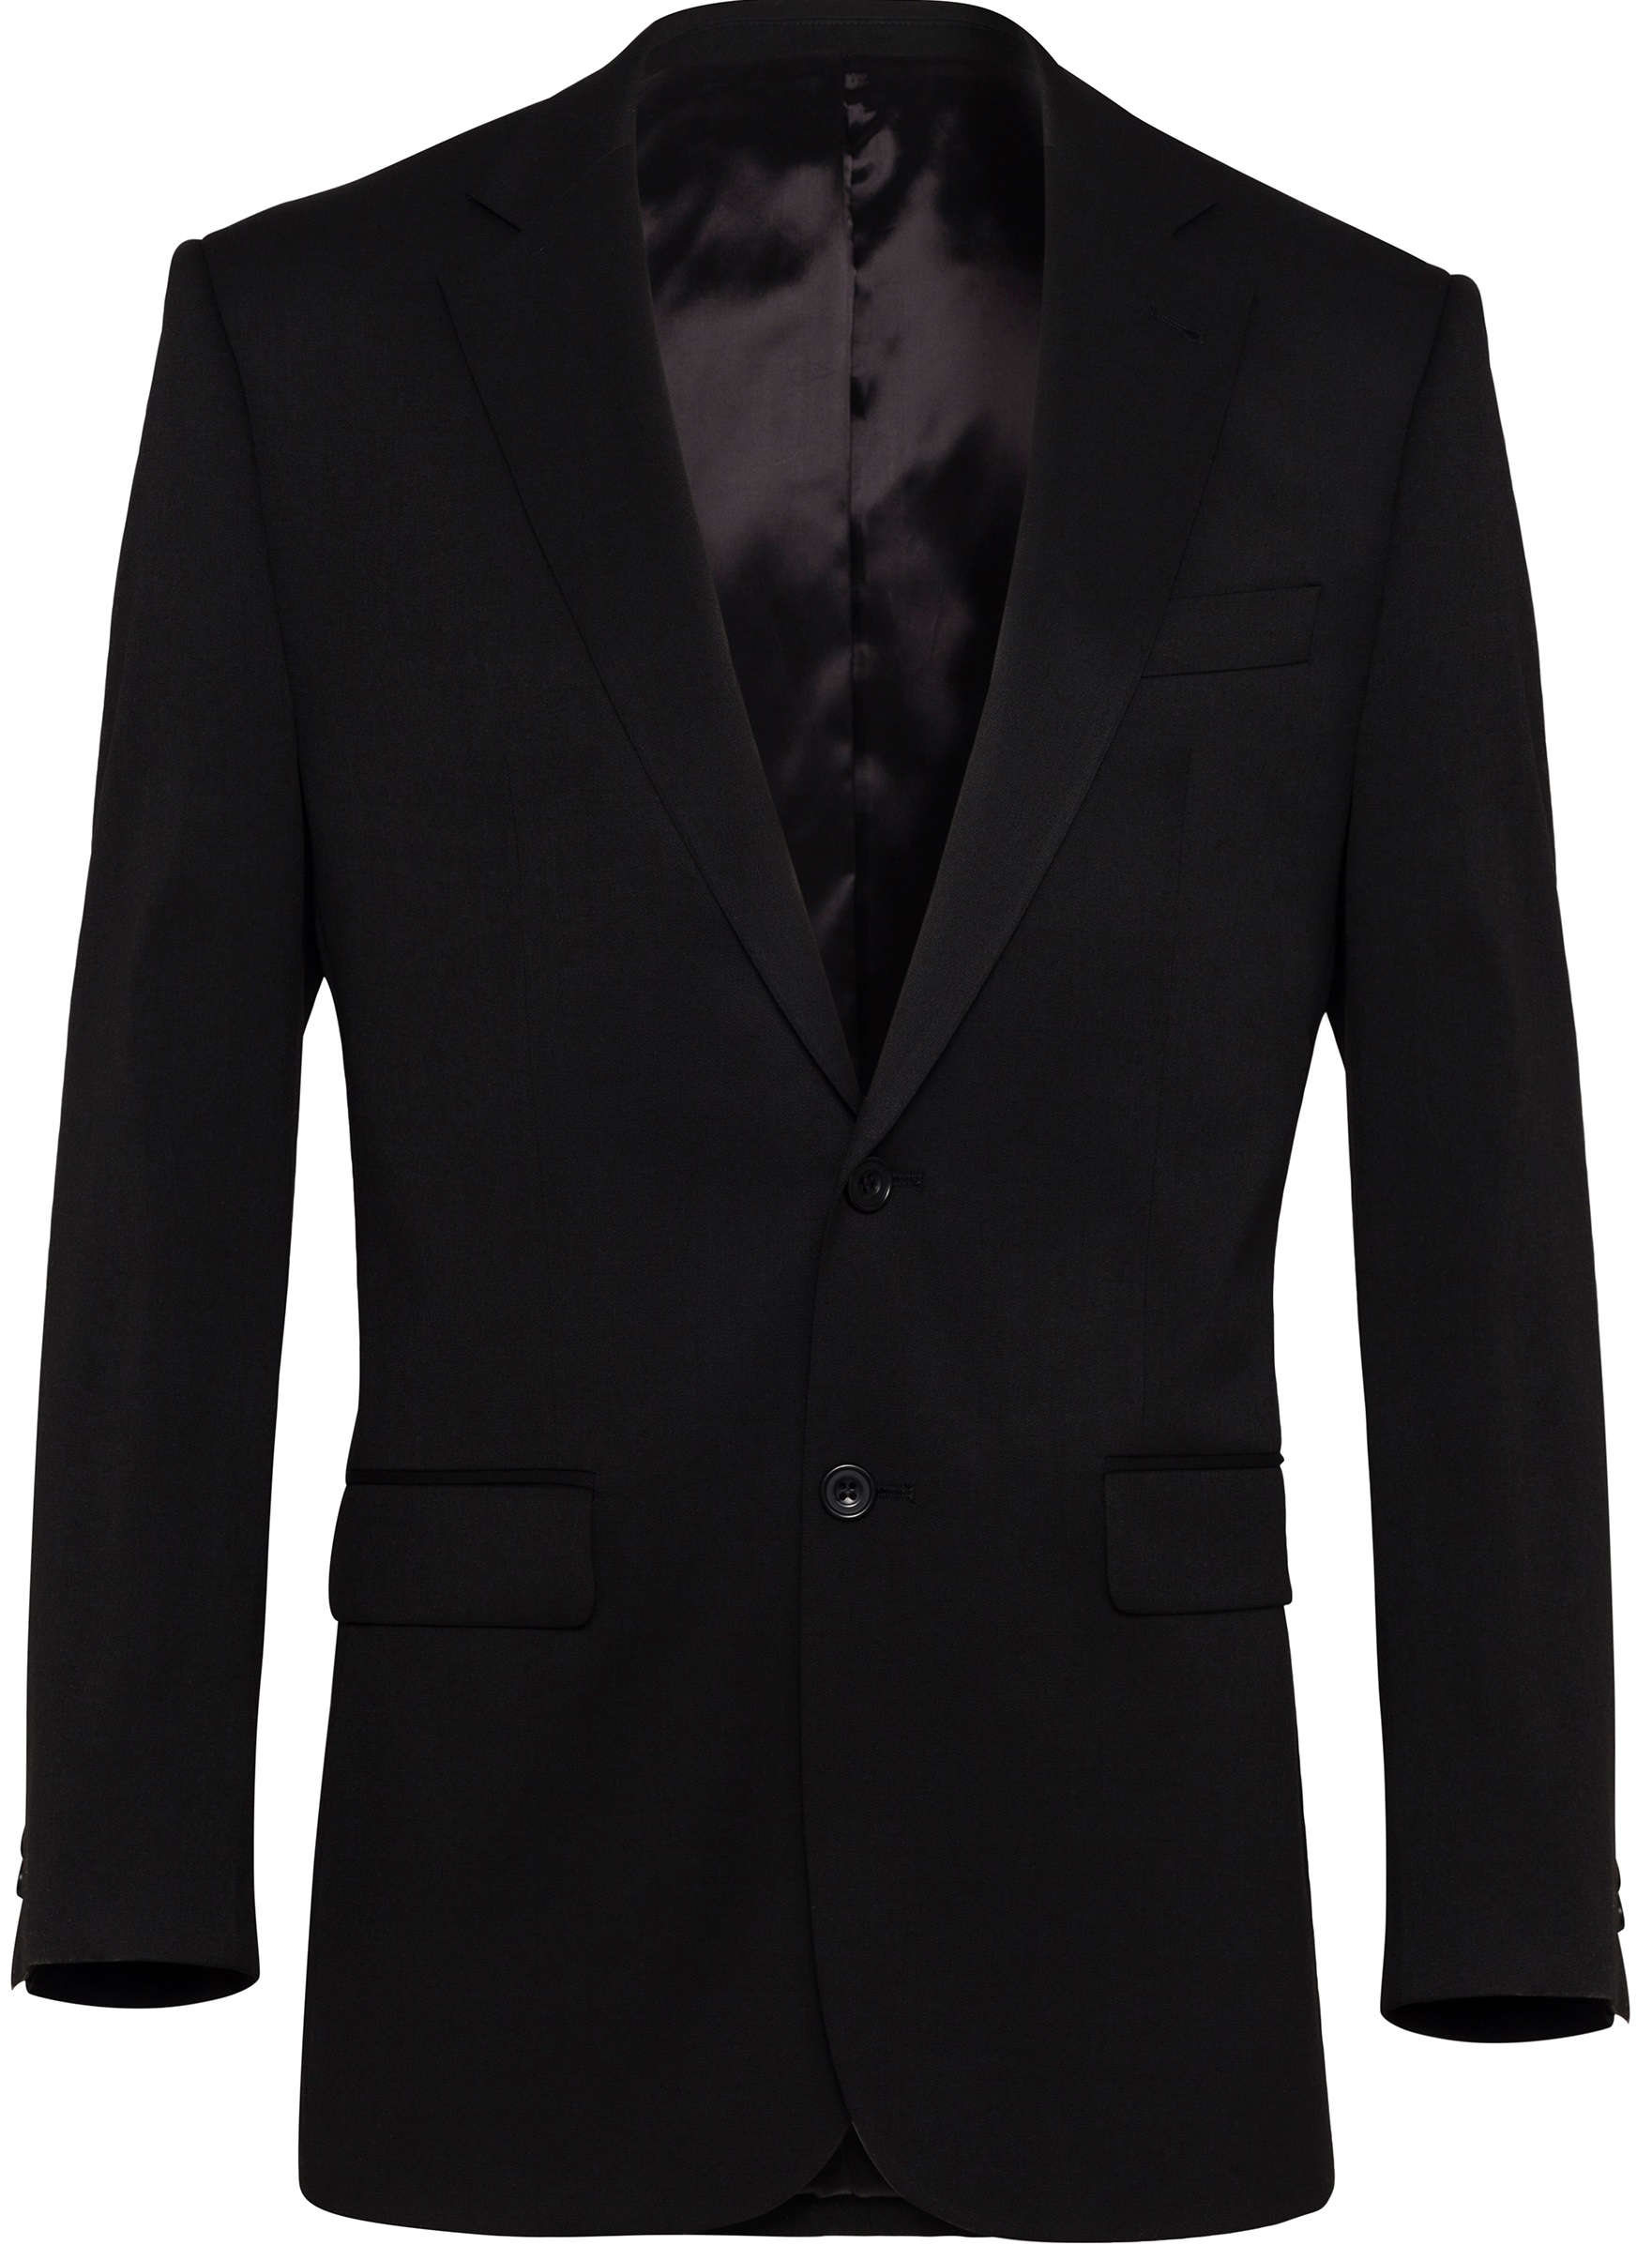 Bracks Mens Suits Online | Bracks Suit Jacket Black or Navy